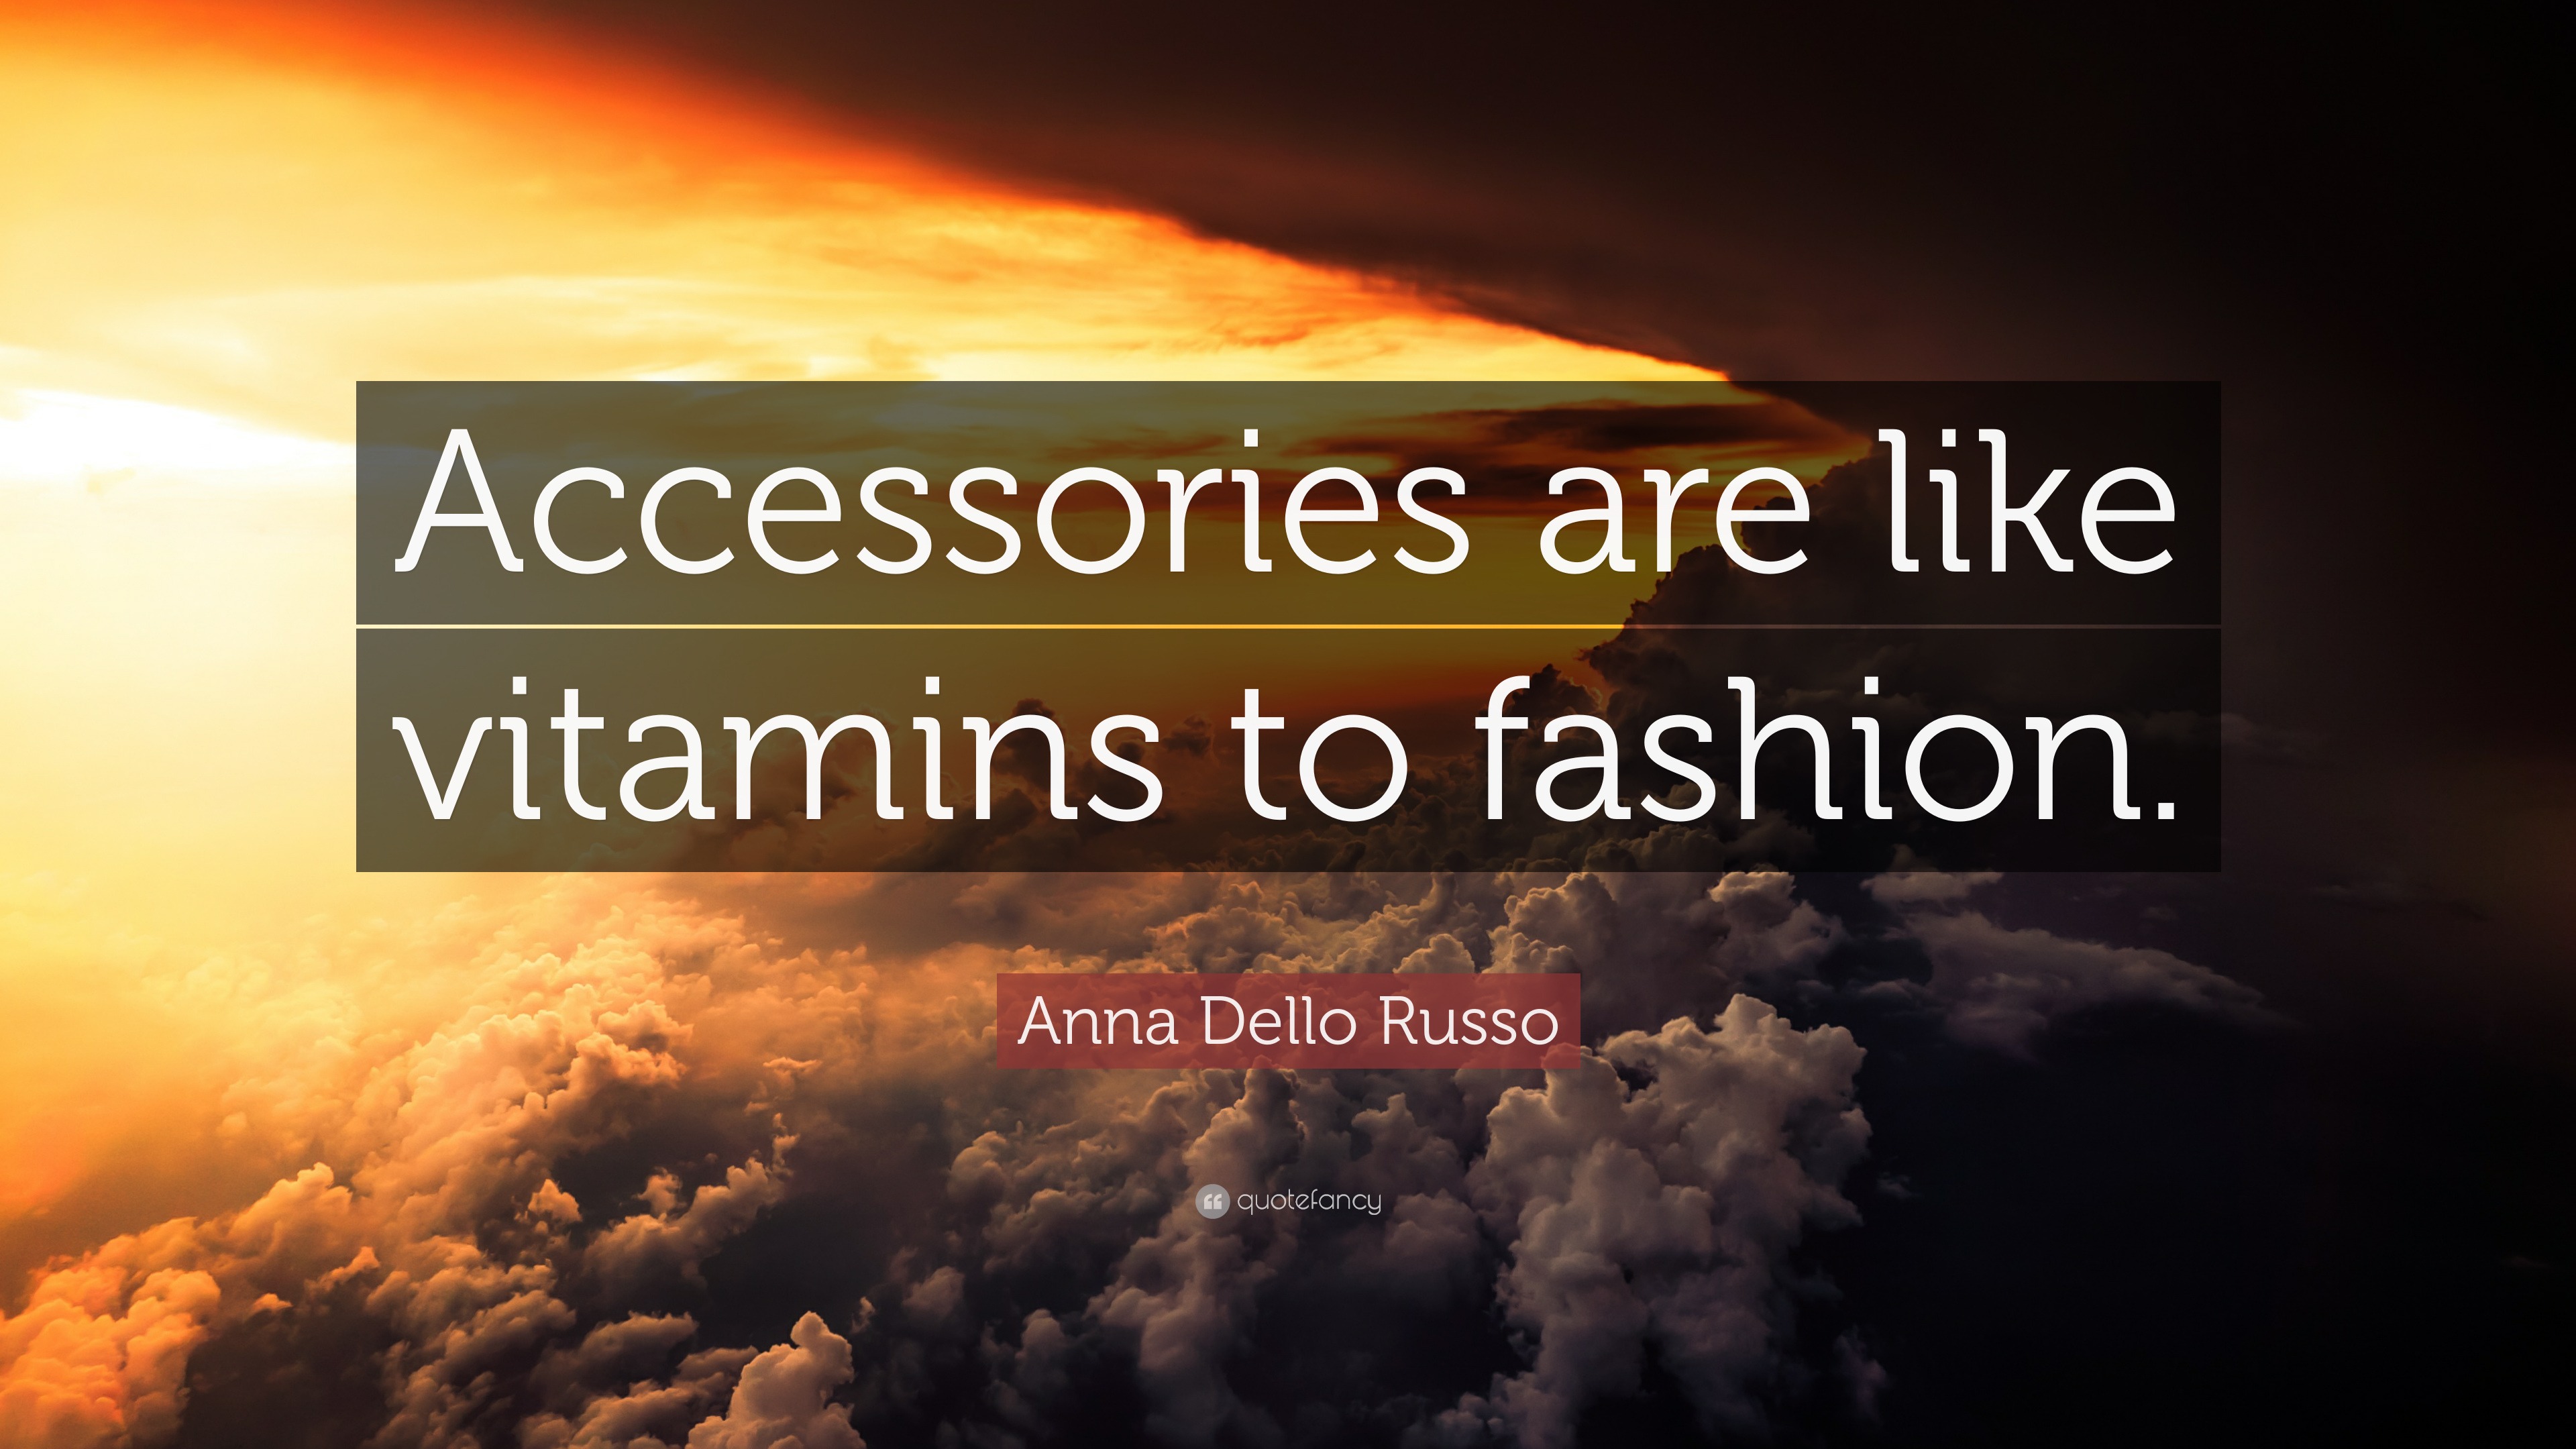 aktivitet Himlen flydende Anna Dello Russo Quote: “Accessories are like vitamins to fashion.”